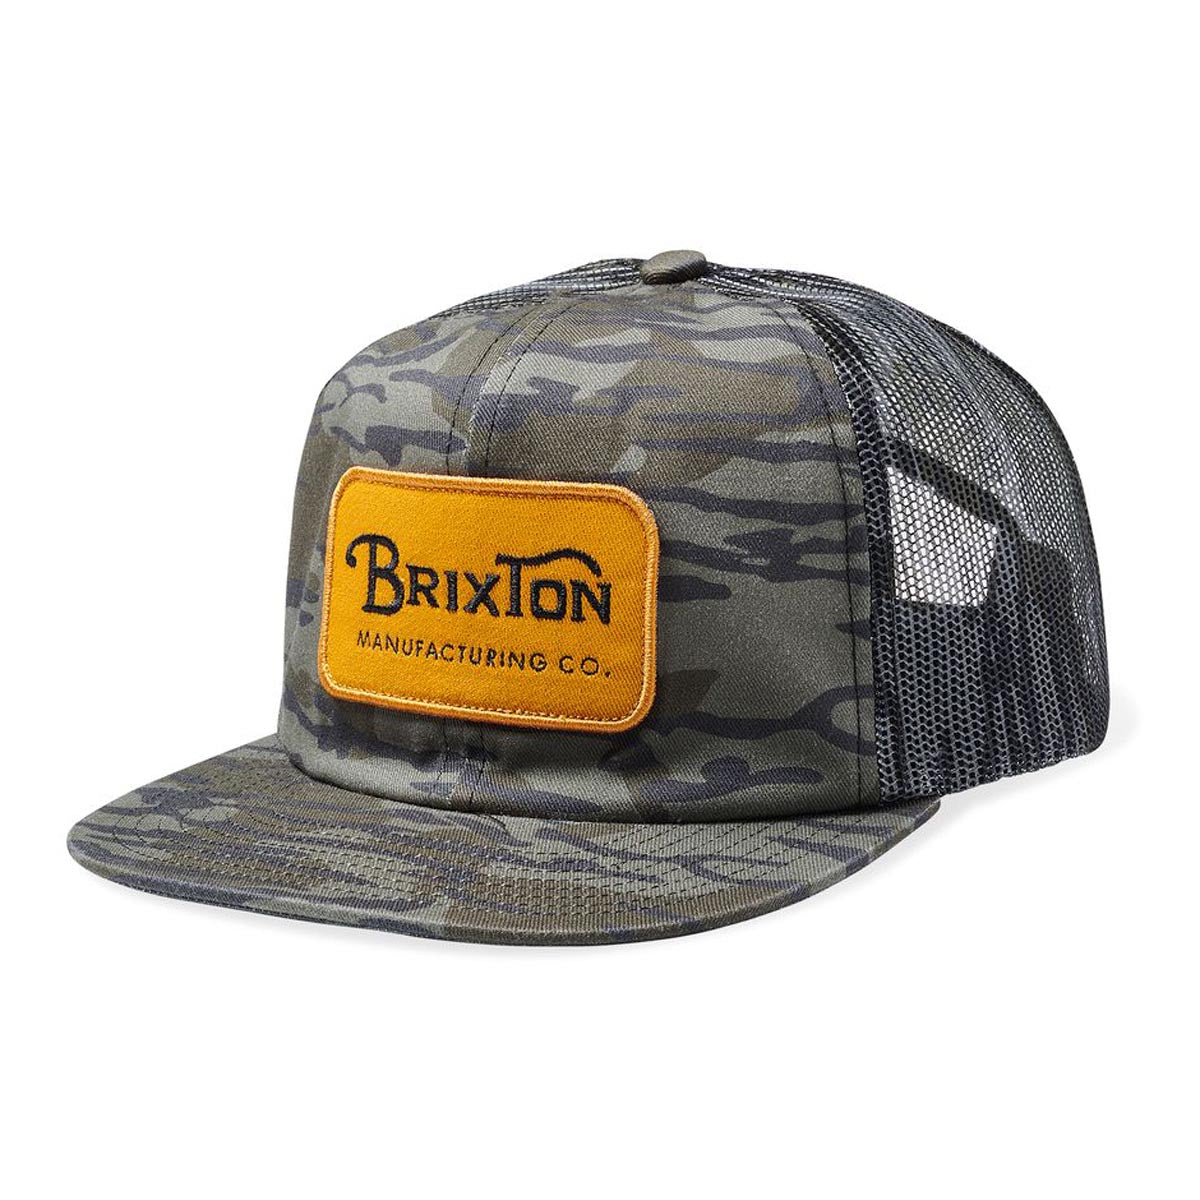 Brixton Grade Hp Trucker Hat - Bb Camo image 1